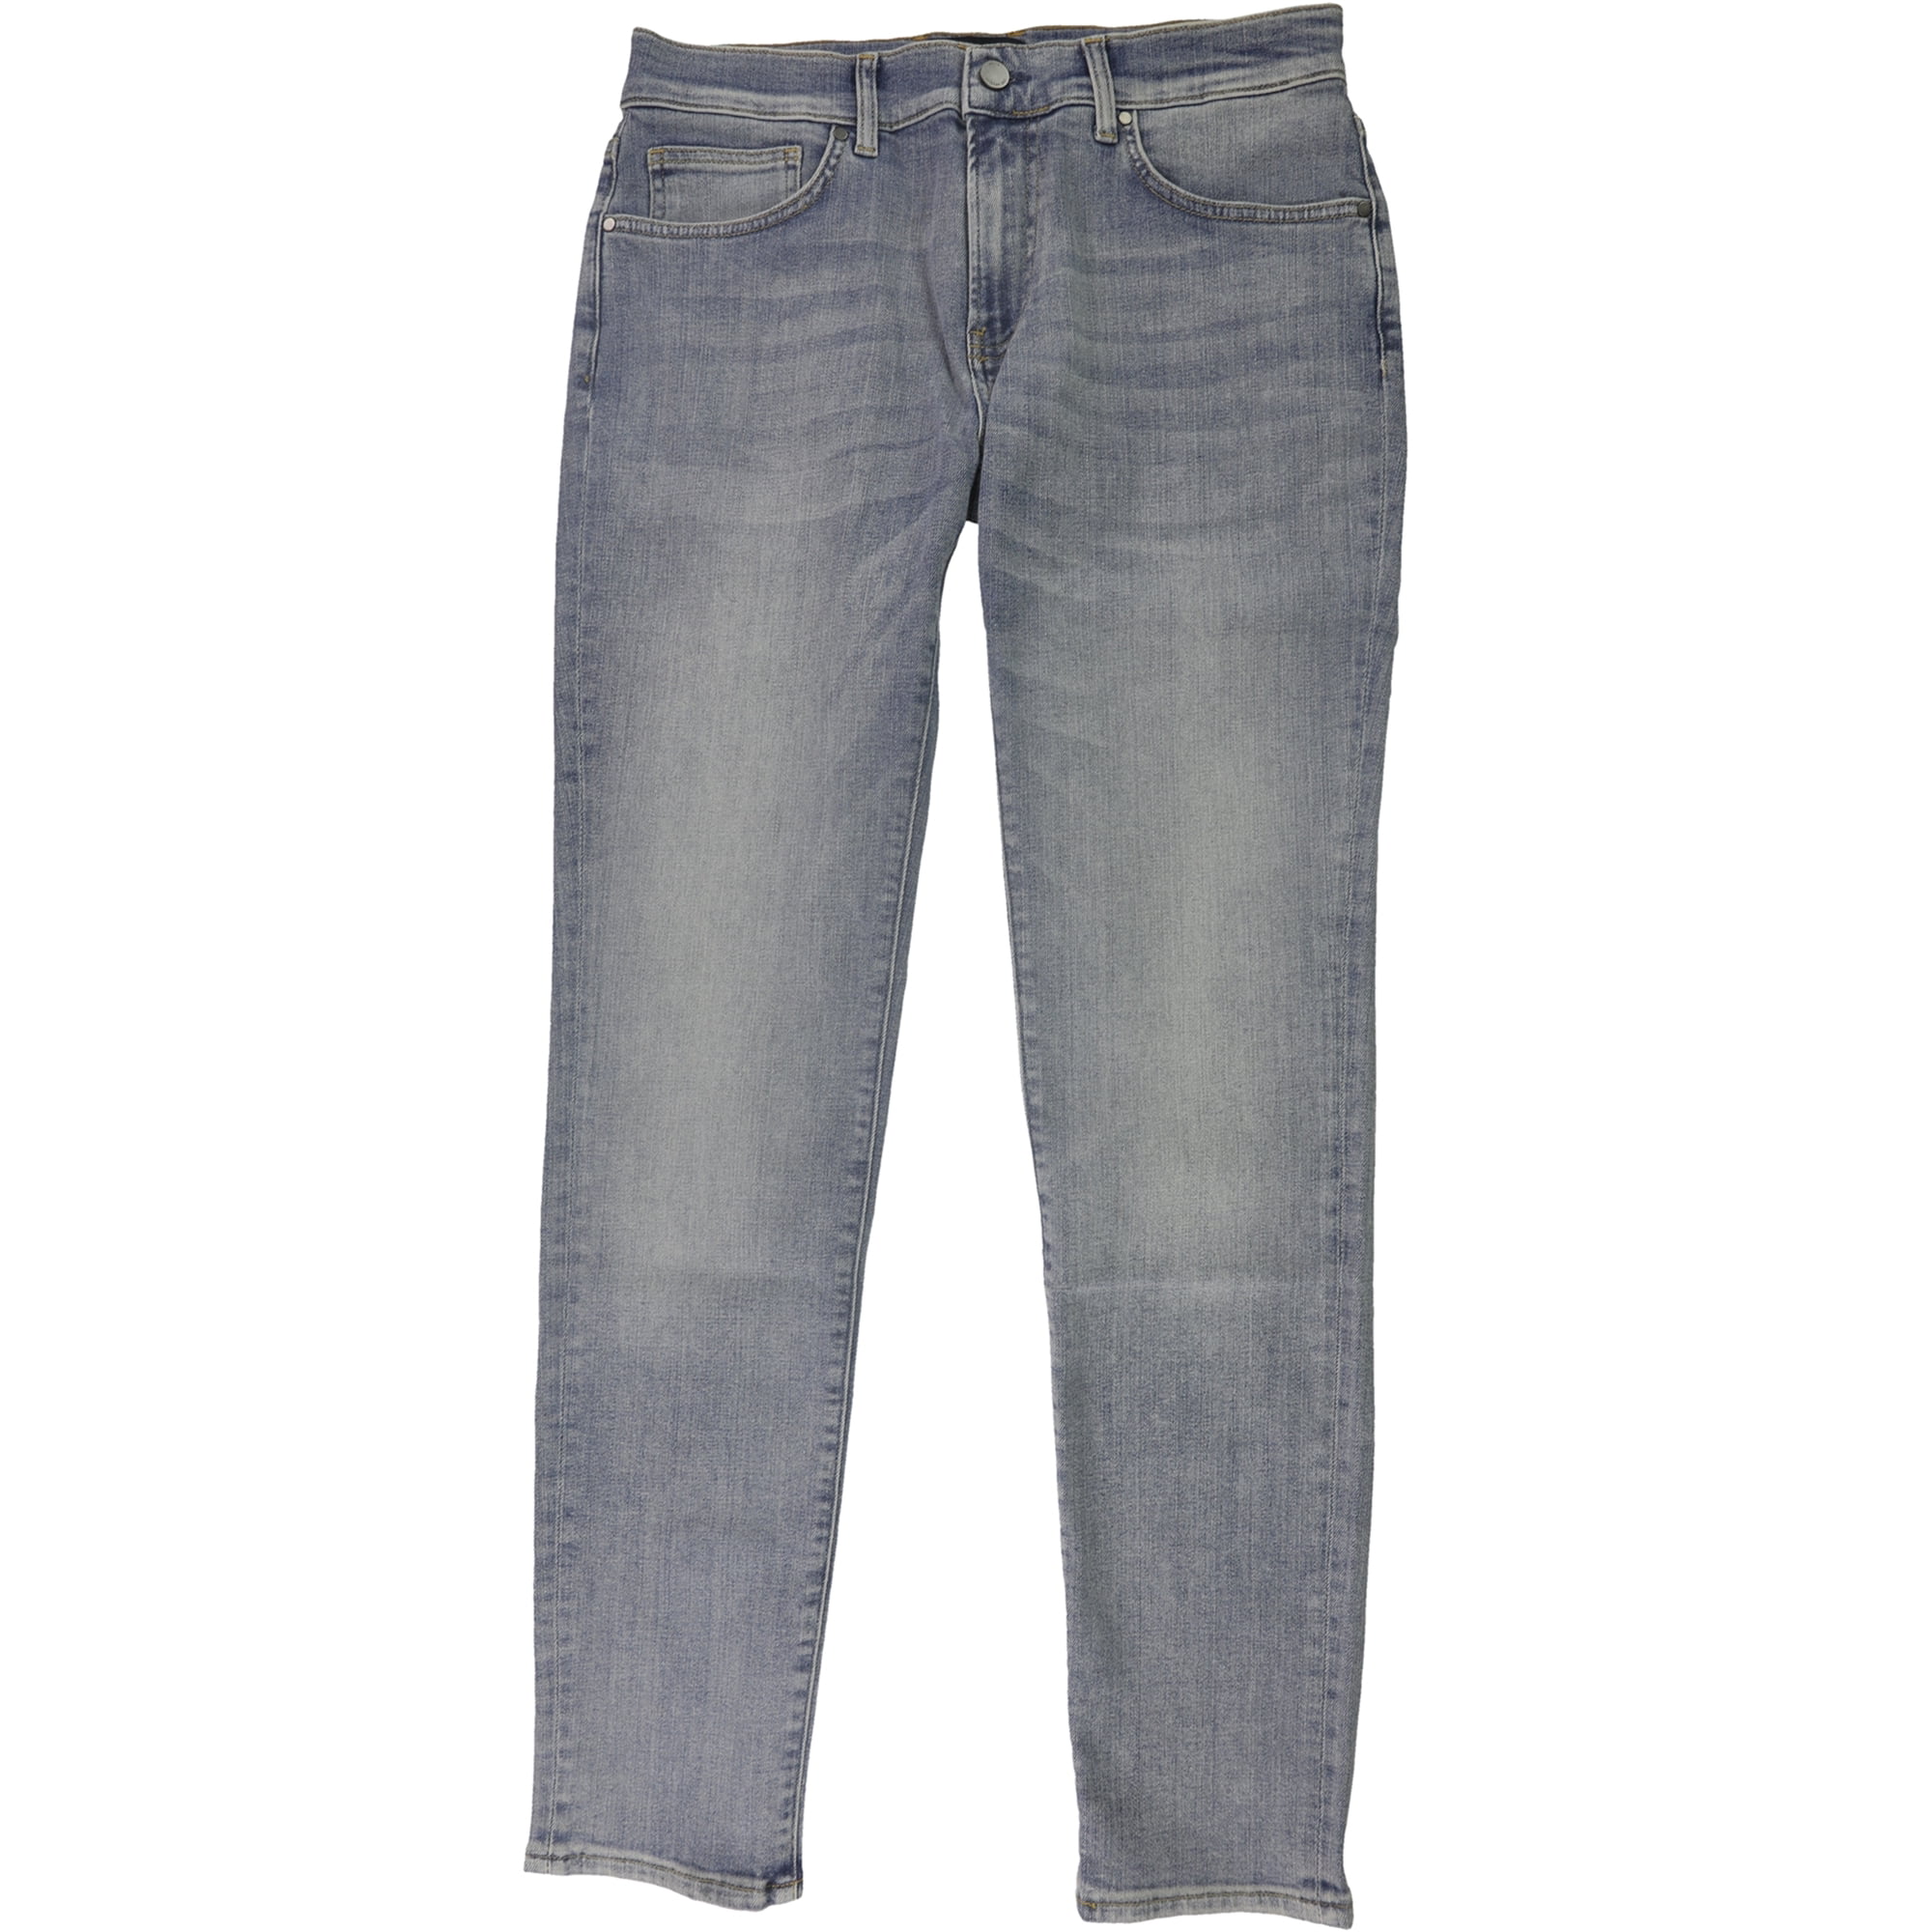 Men's jeans // Urban Classics Heavy Destroyed Slim Fit Jeans blue